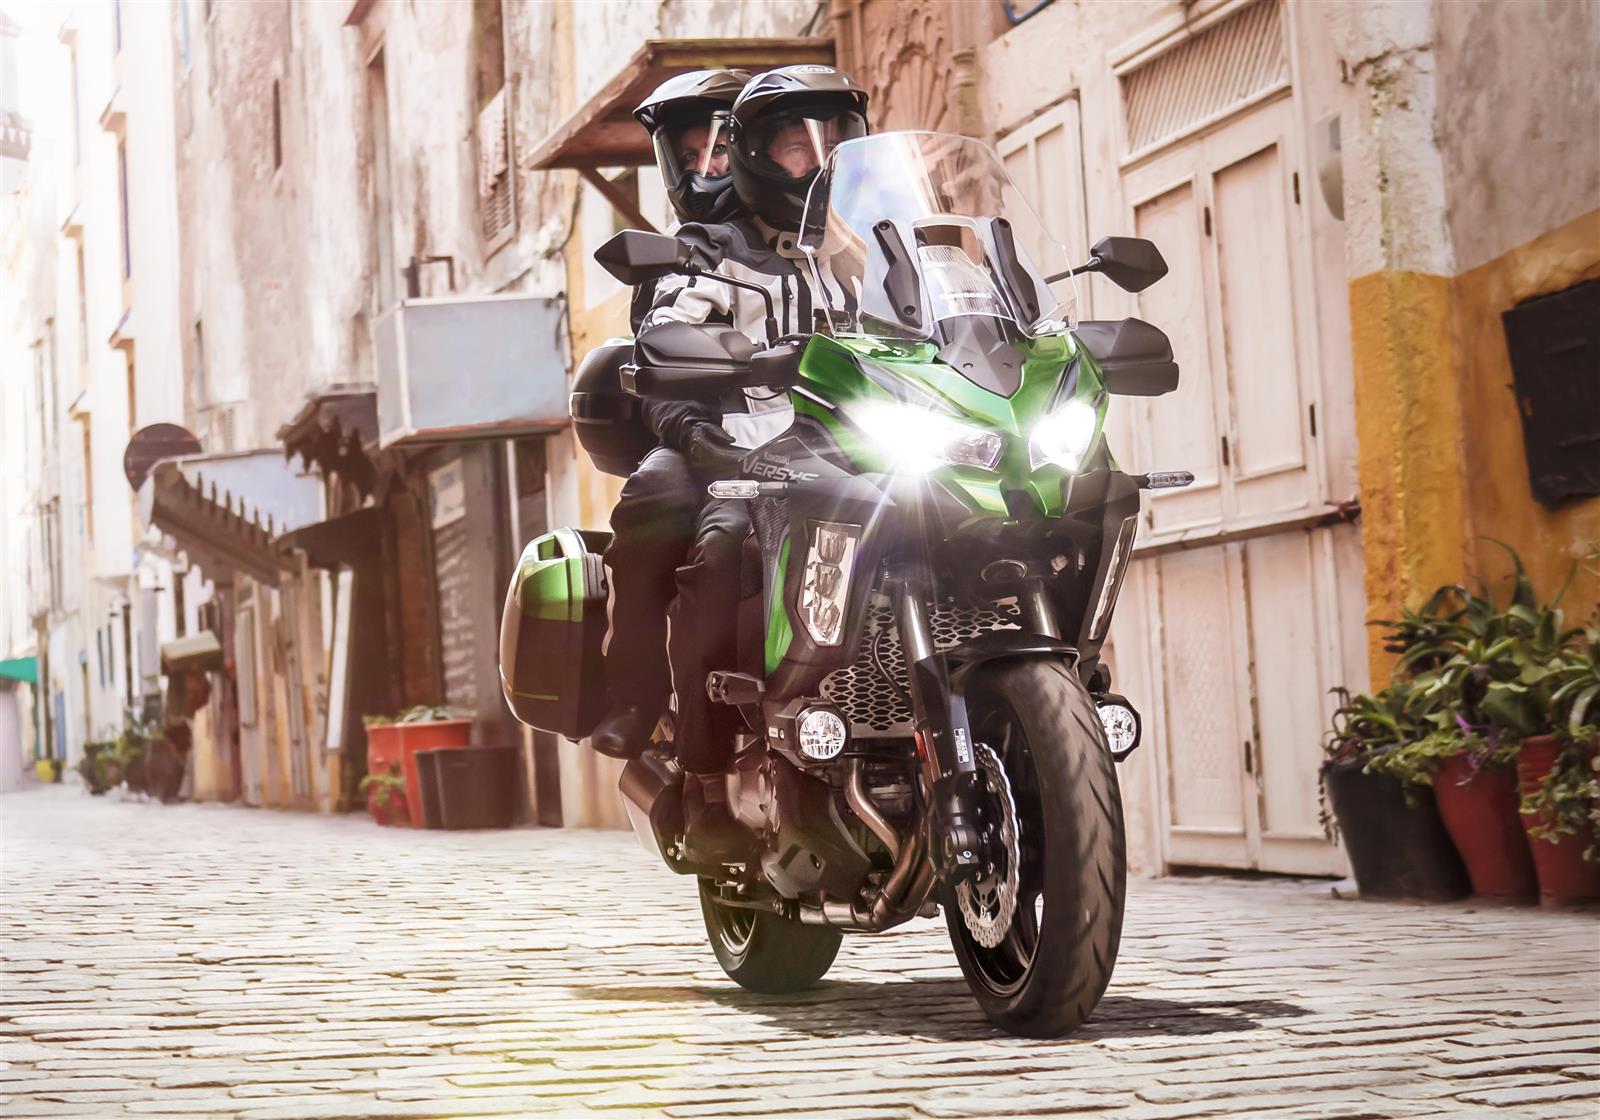 Kawasaki Versys 1000 with rider and pillion on narrow streets